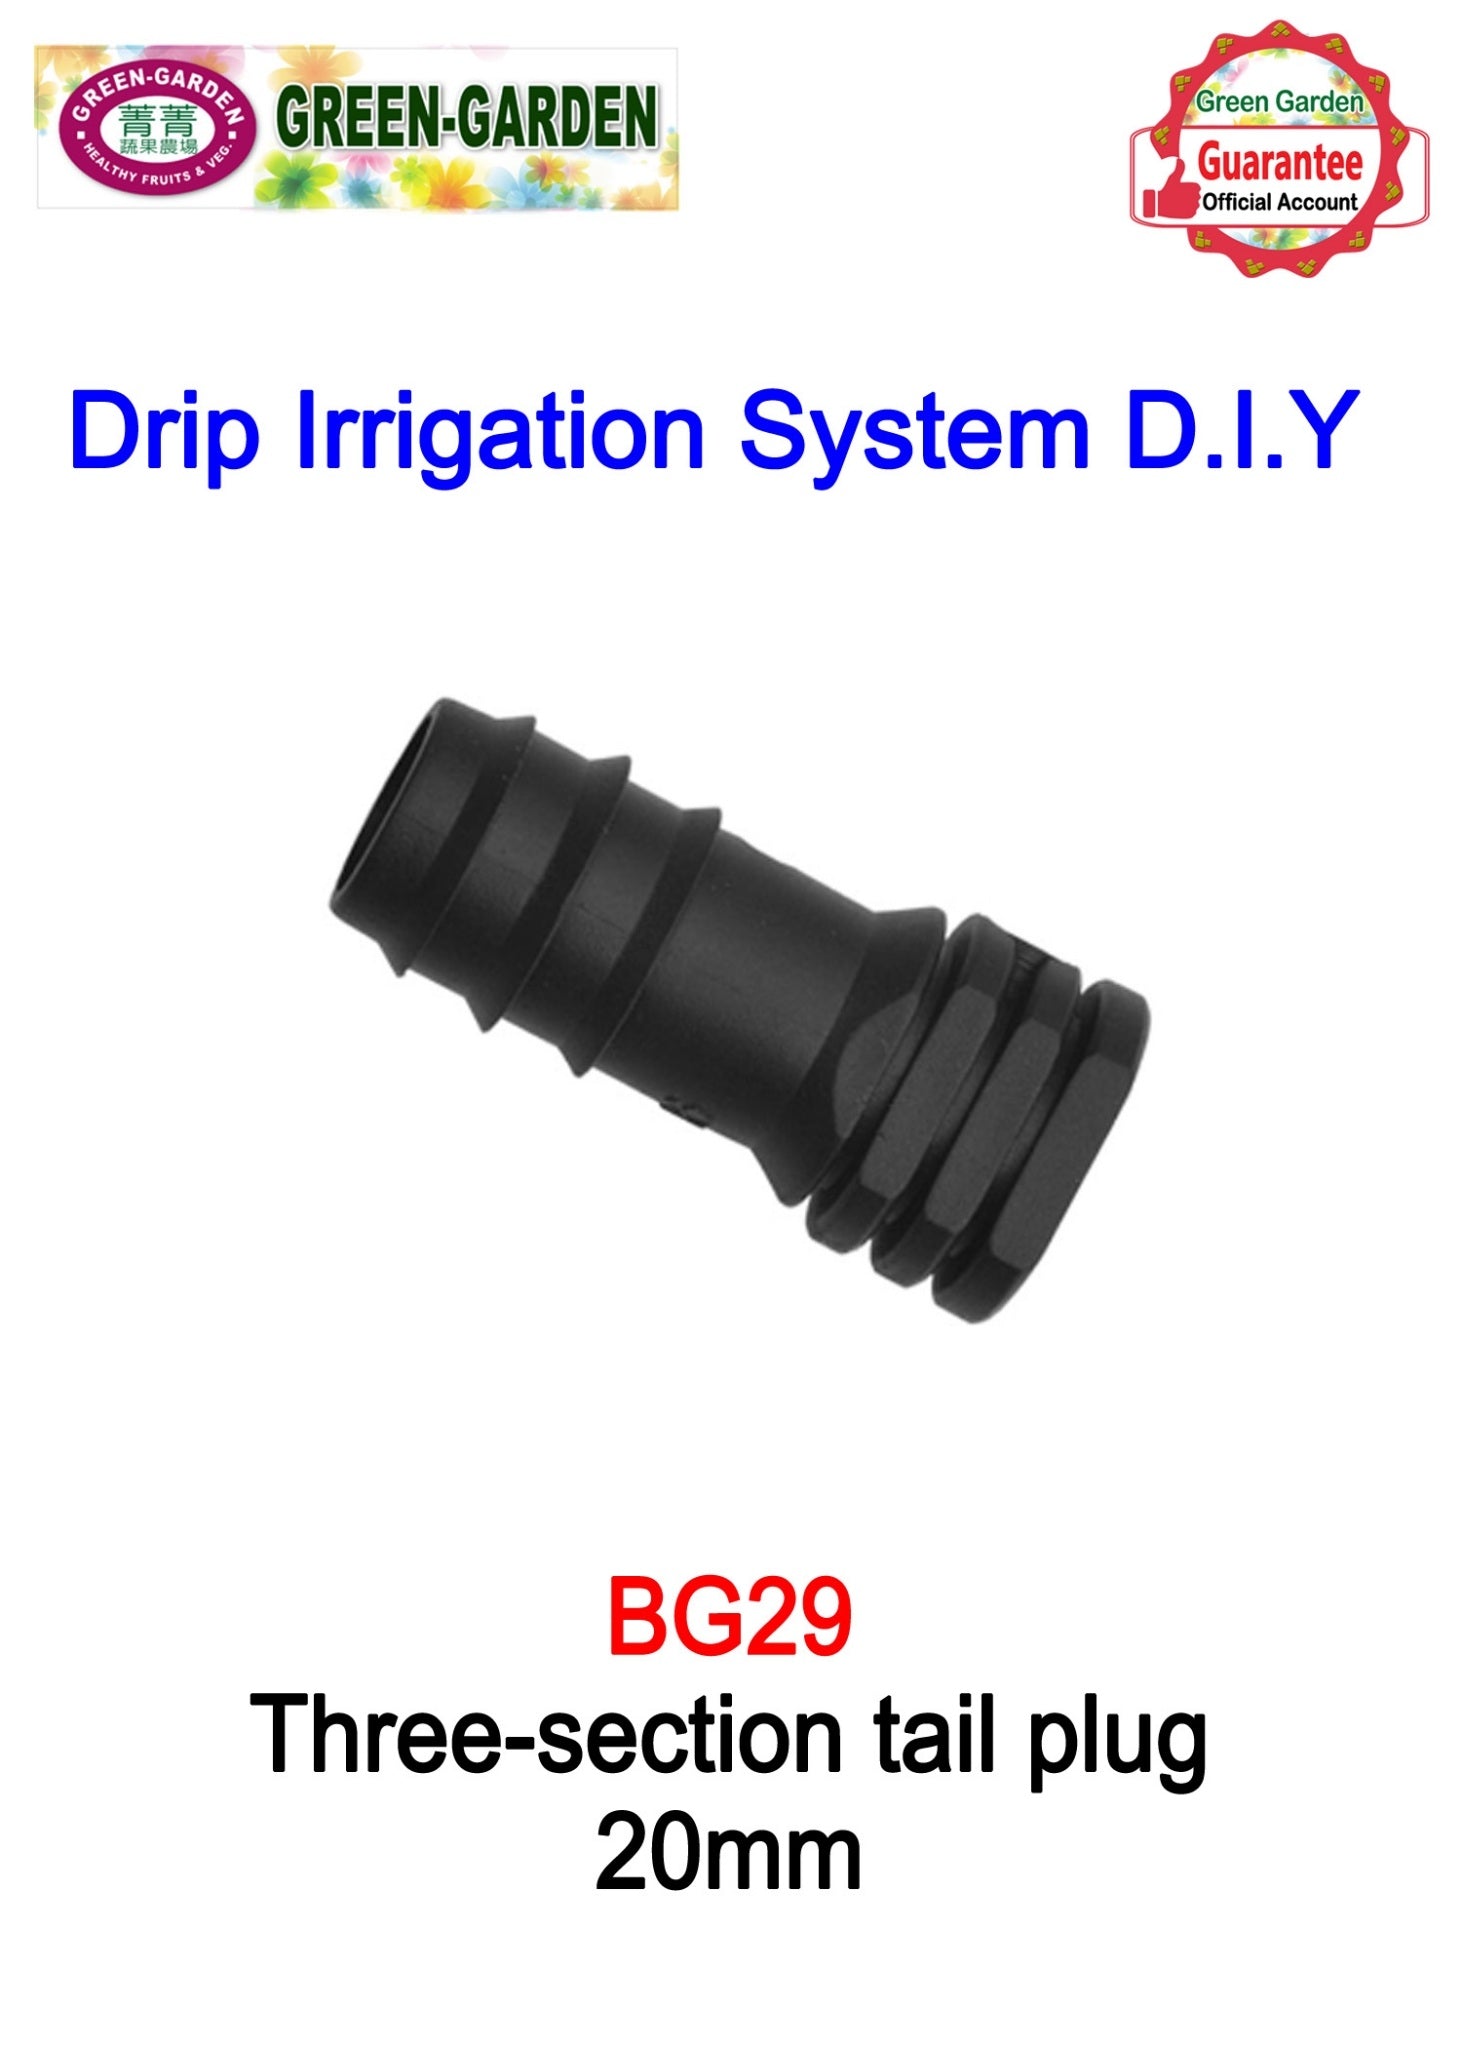 Drip Irrigation System - 20mm three-section tail plug (2pcs) BG29